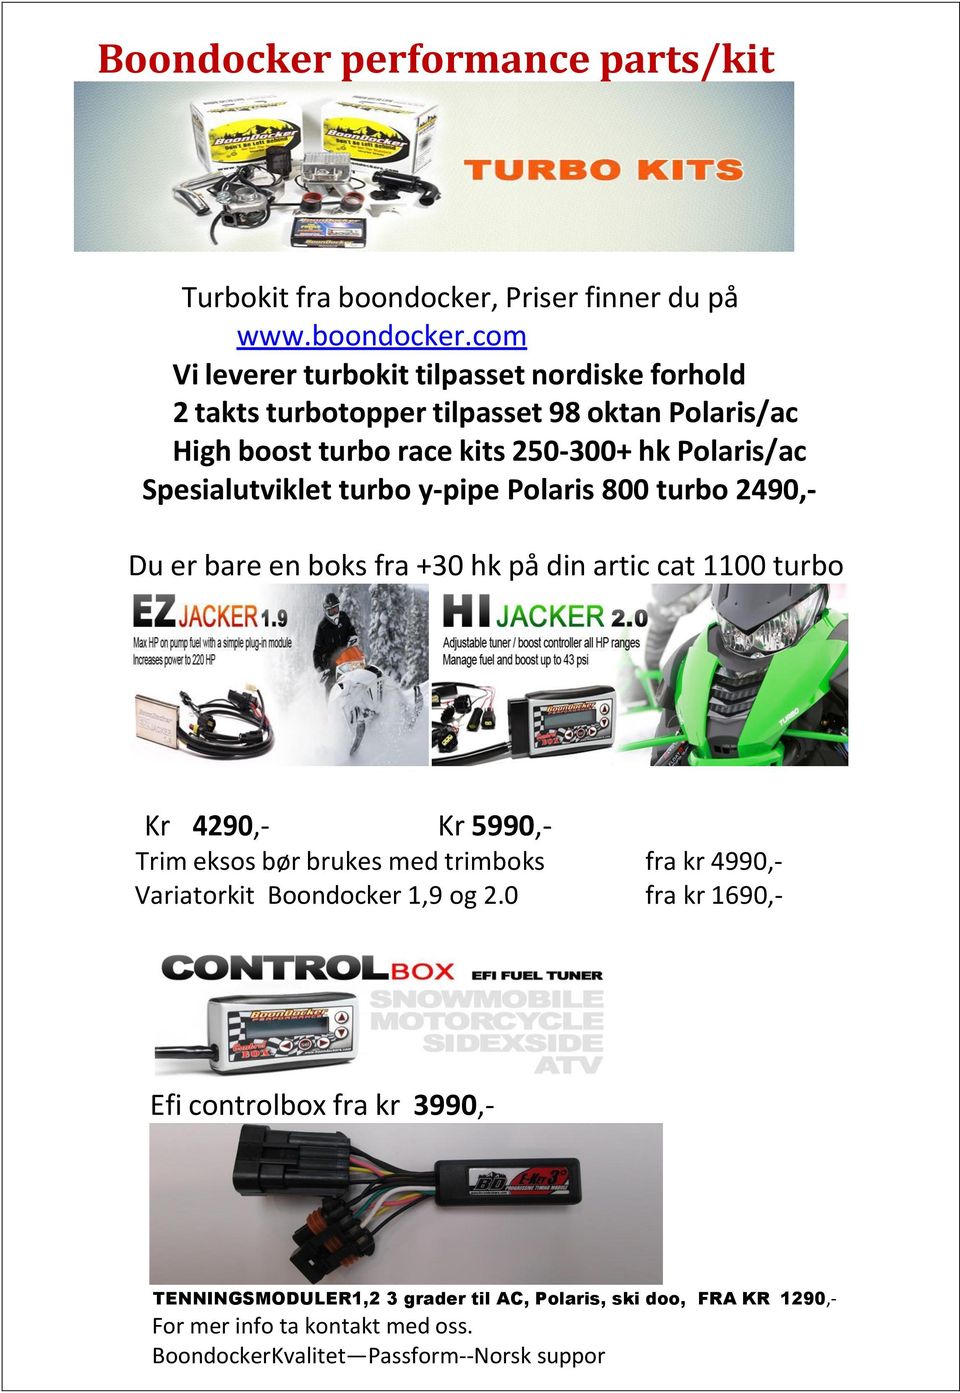 com Vi leverer turbokit tilpasset nordiske forhold 2 takts turbotopper tilpasset 98 oktan Polaris/ac High boost turbo race kits 250-300+ hk Polaris/ac